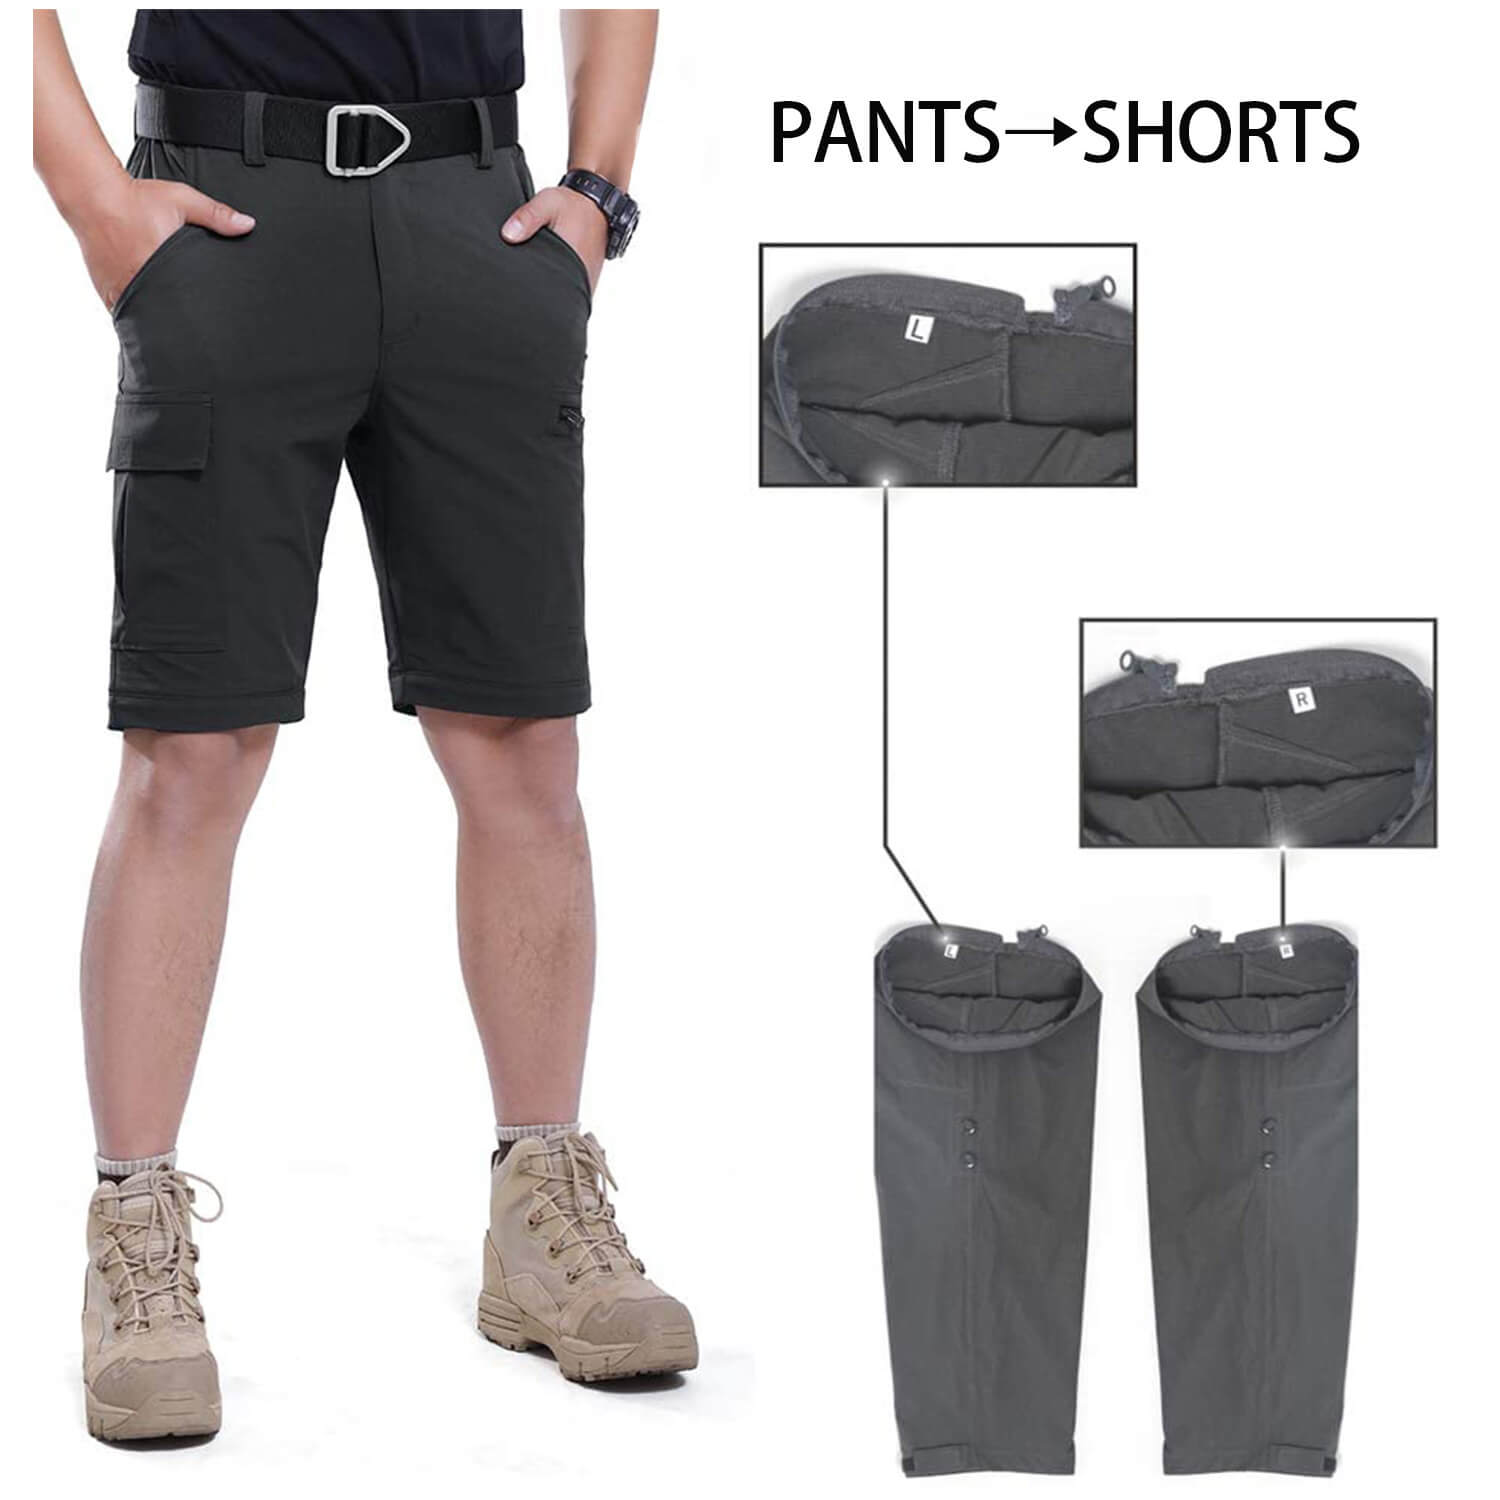 Men's Convertible Hiking Pants